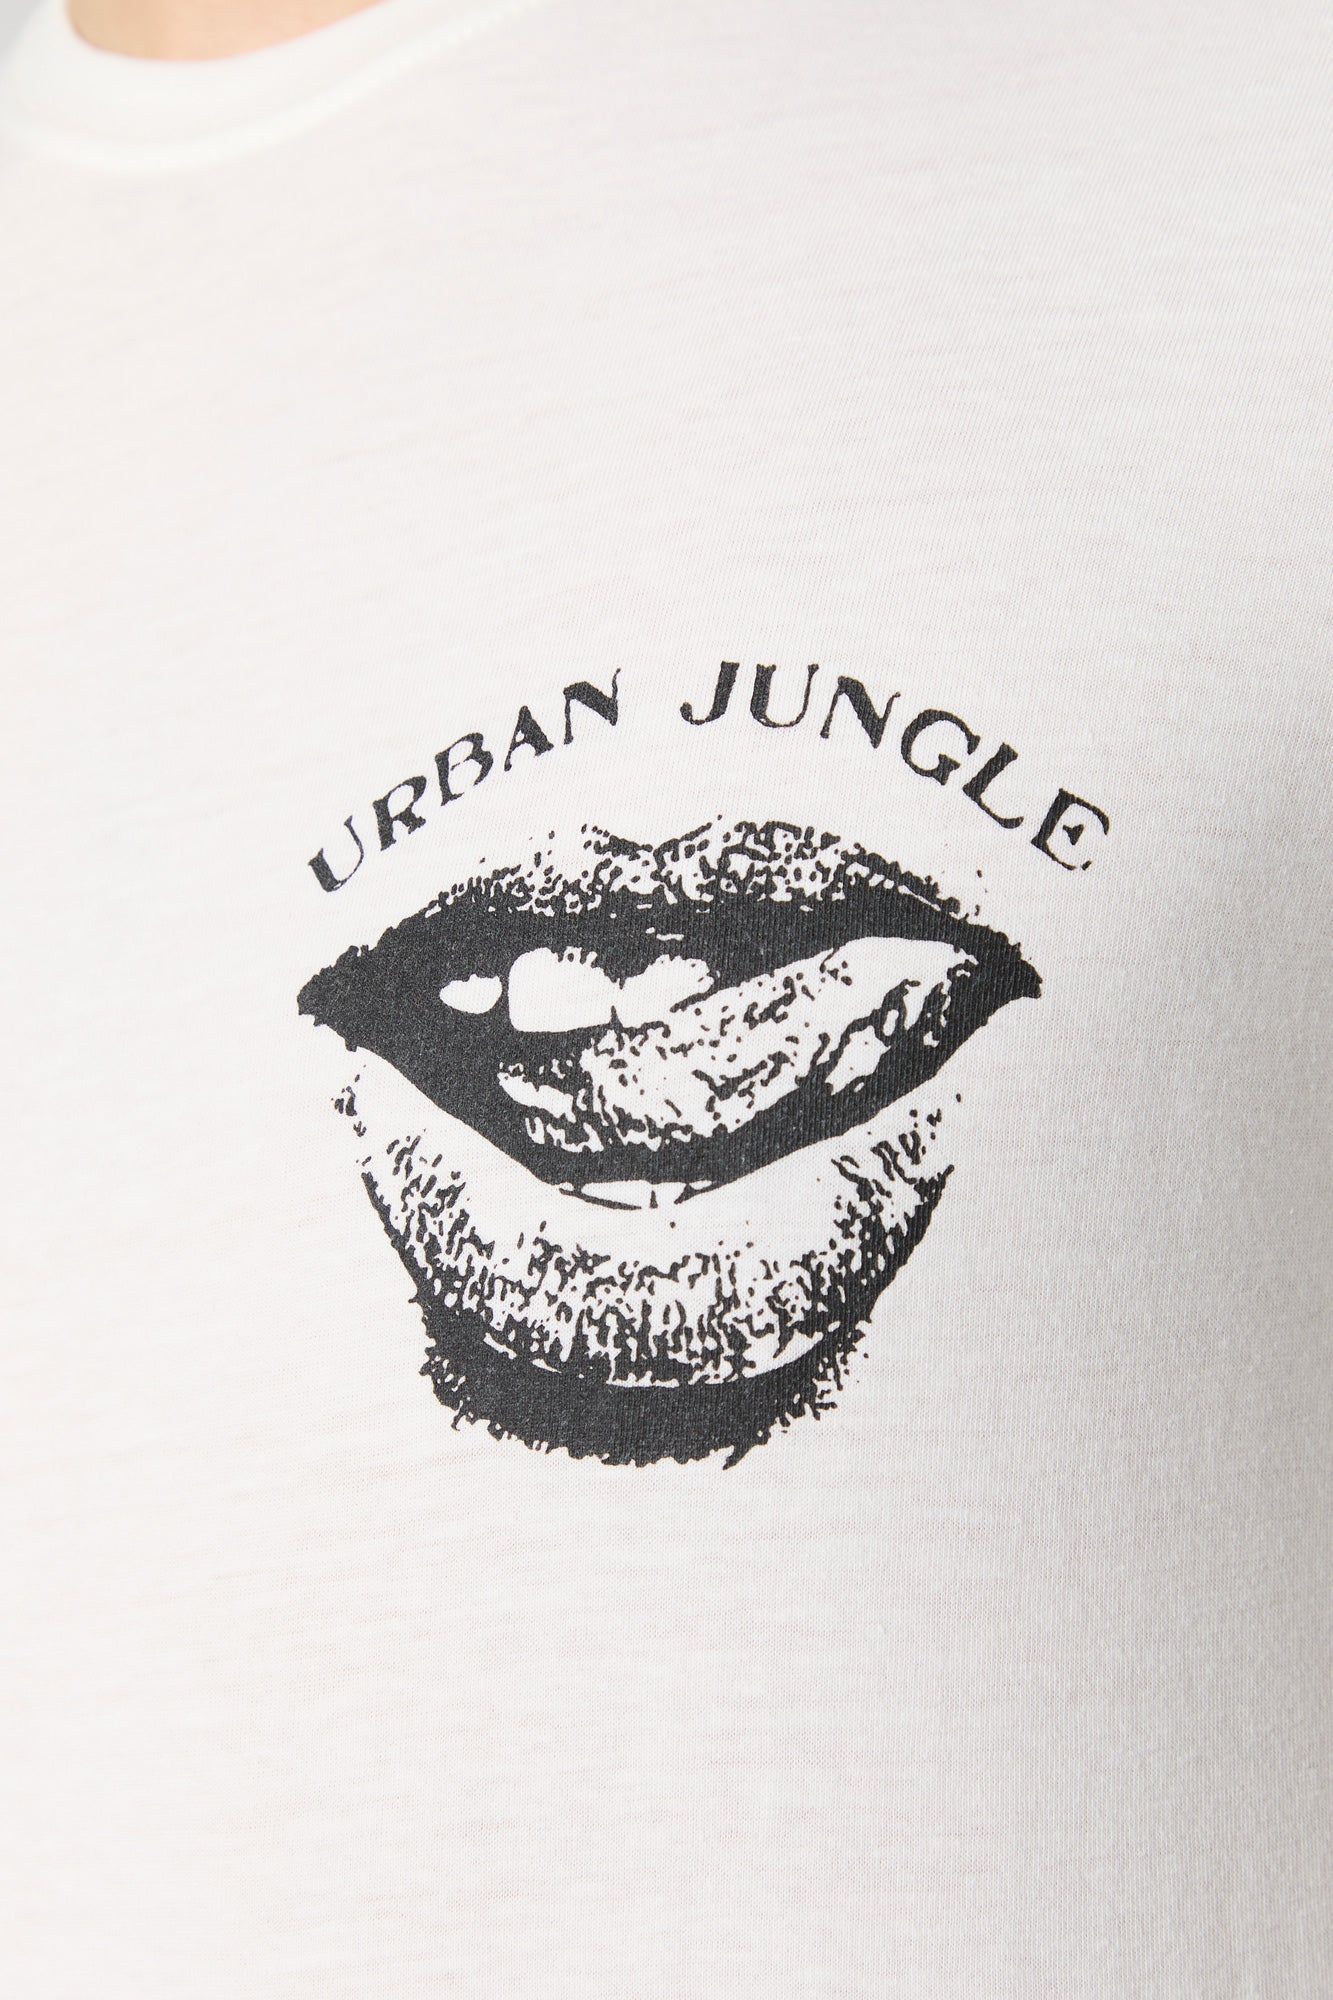 Urban Jungle Graphic T-Shirt